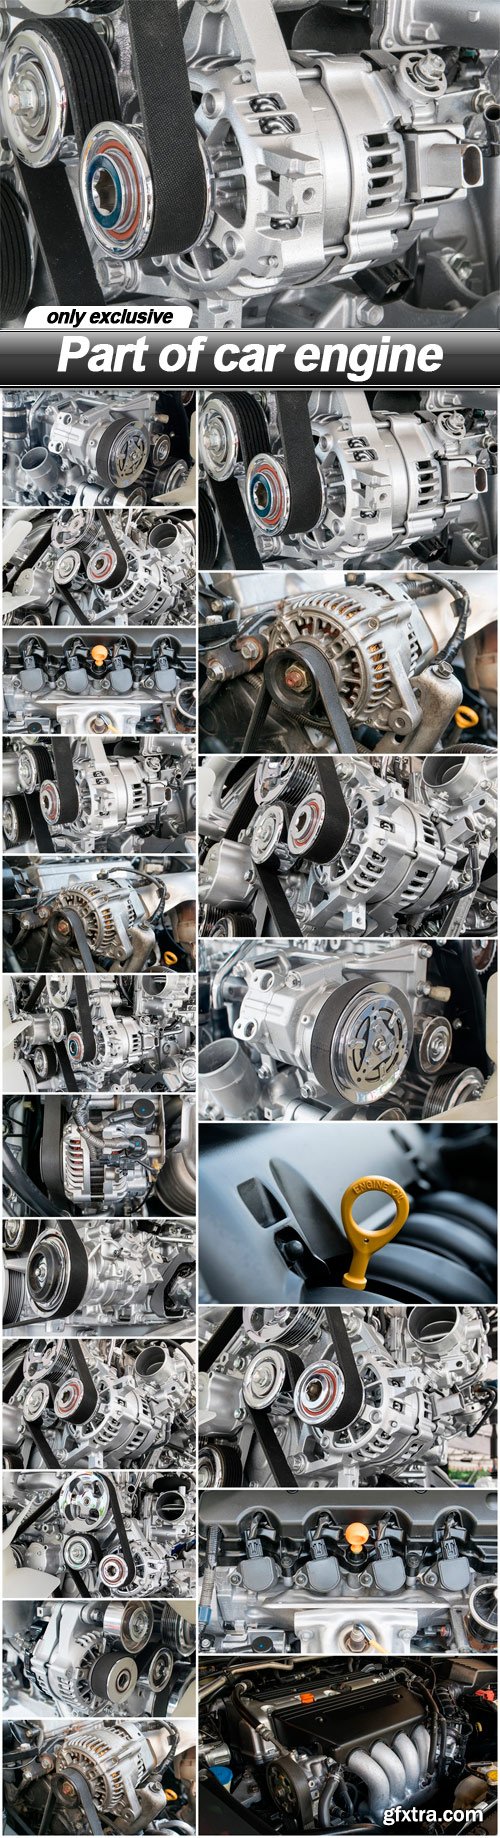 Part of car engine - 20 UHQ JPEG